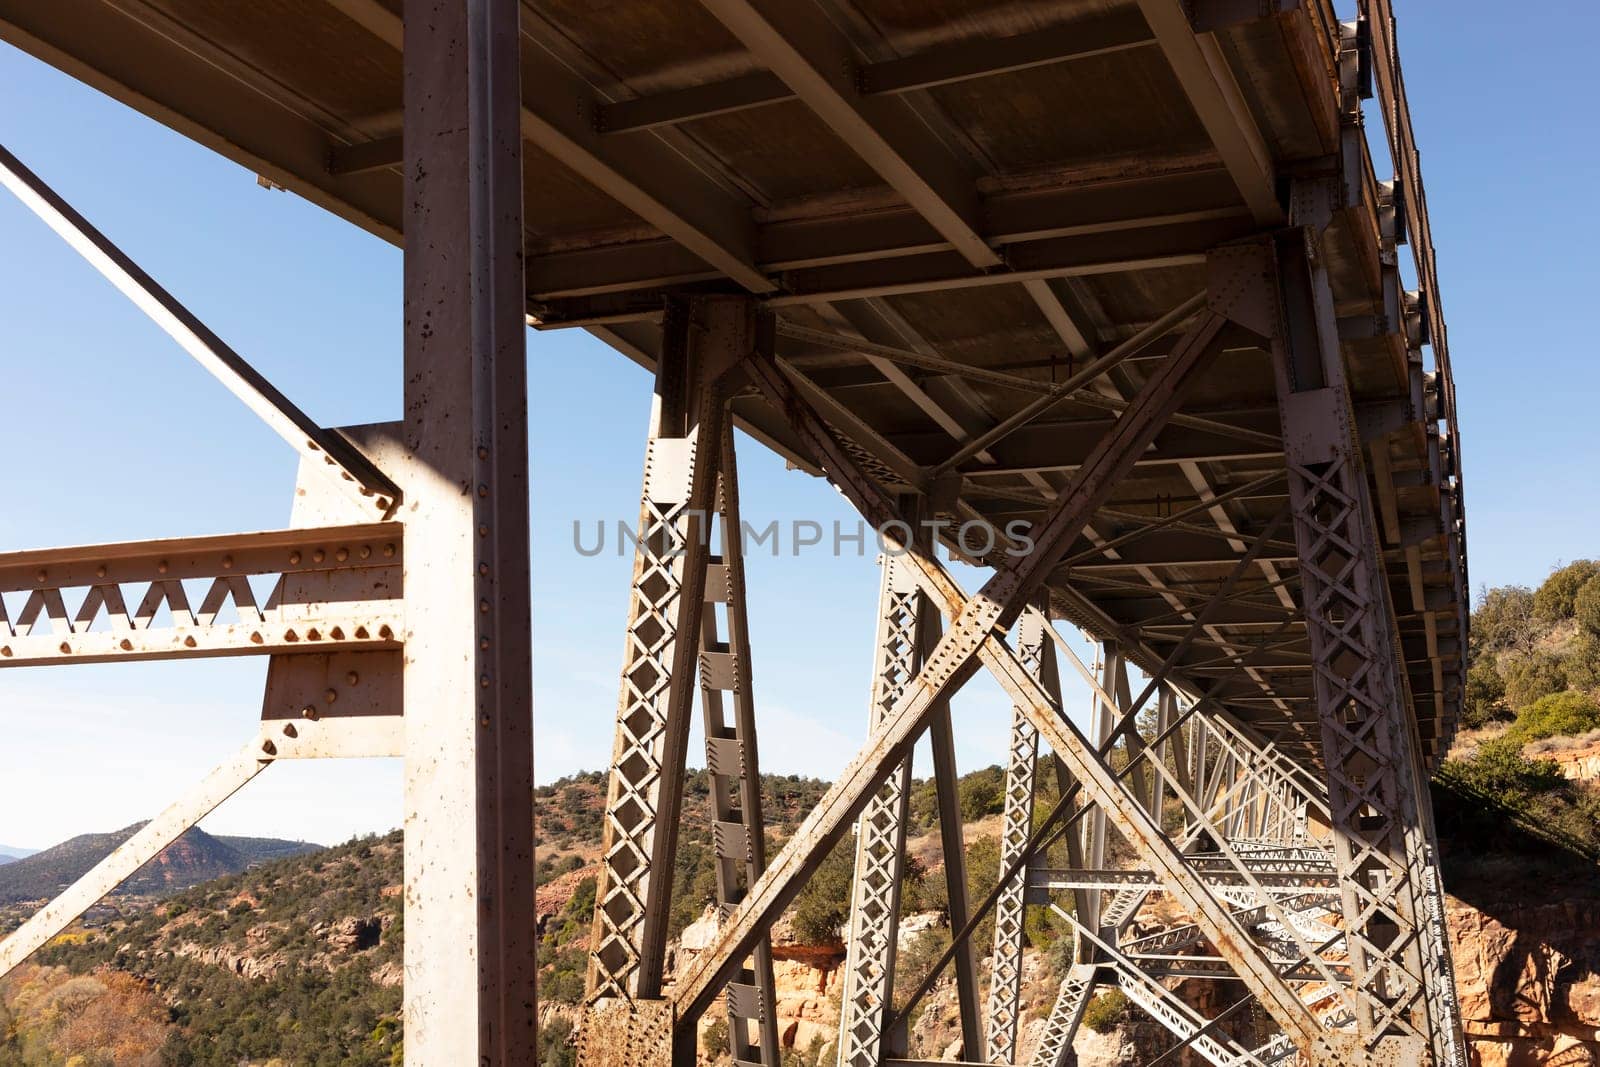 View Beneath Metal Construction Of Bridge Supports Against Blue Sky And Rocks. Rivets And Braces On Metal Beams. Midgley Bridge, Sedona Arizona. Horizontal Plane. Oak Creek Canyon, Coconino County.